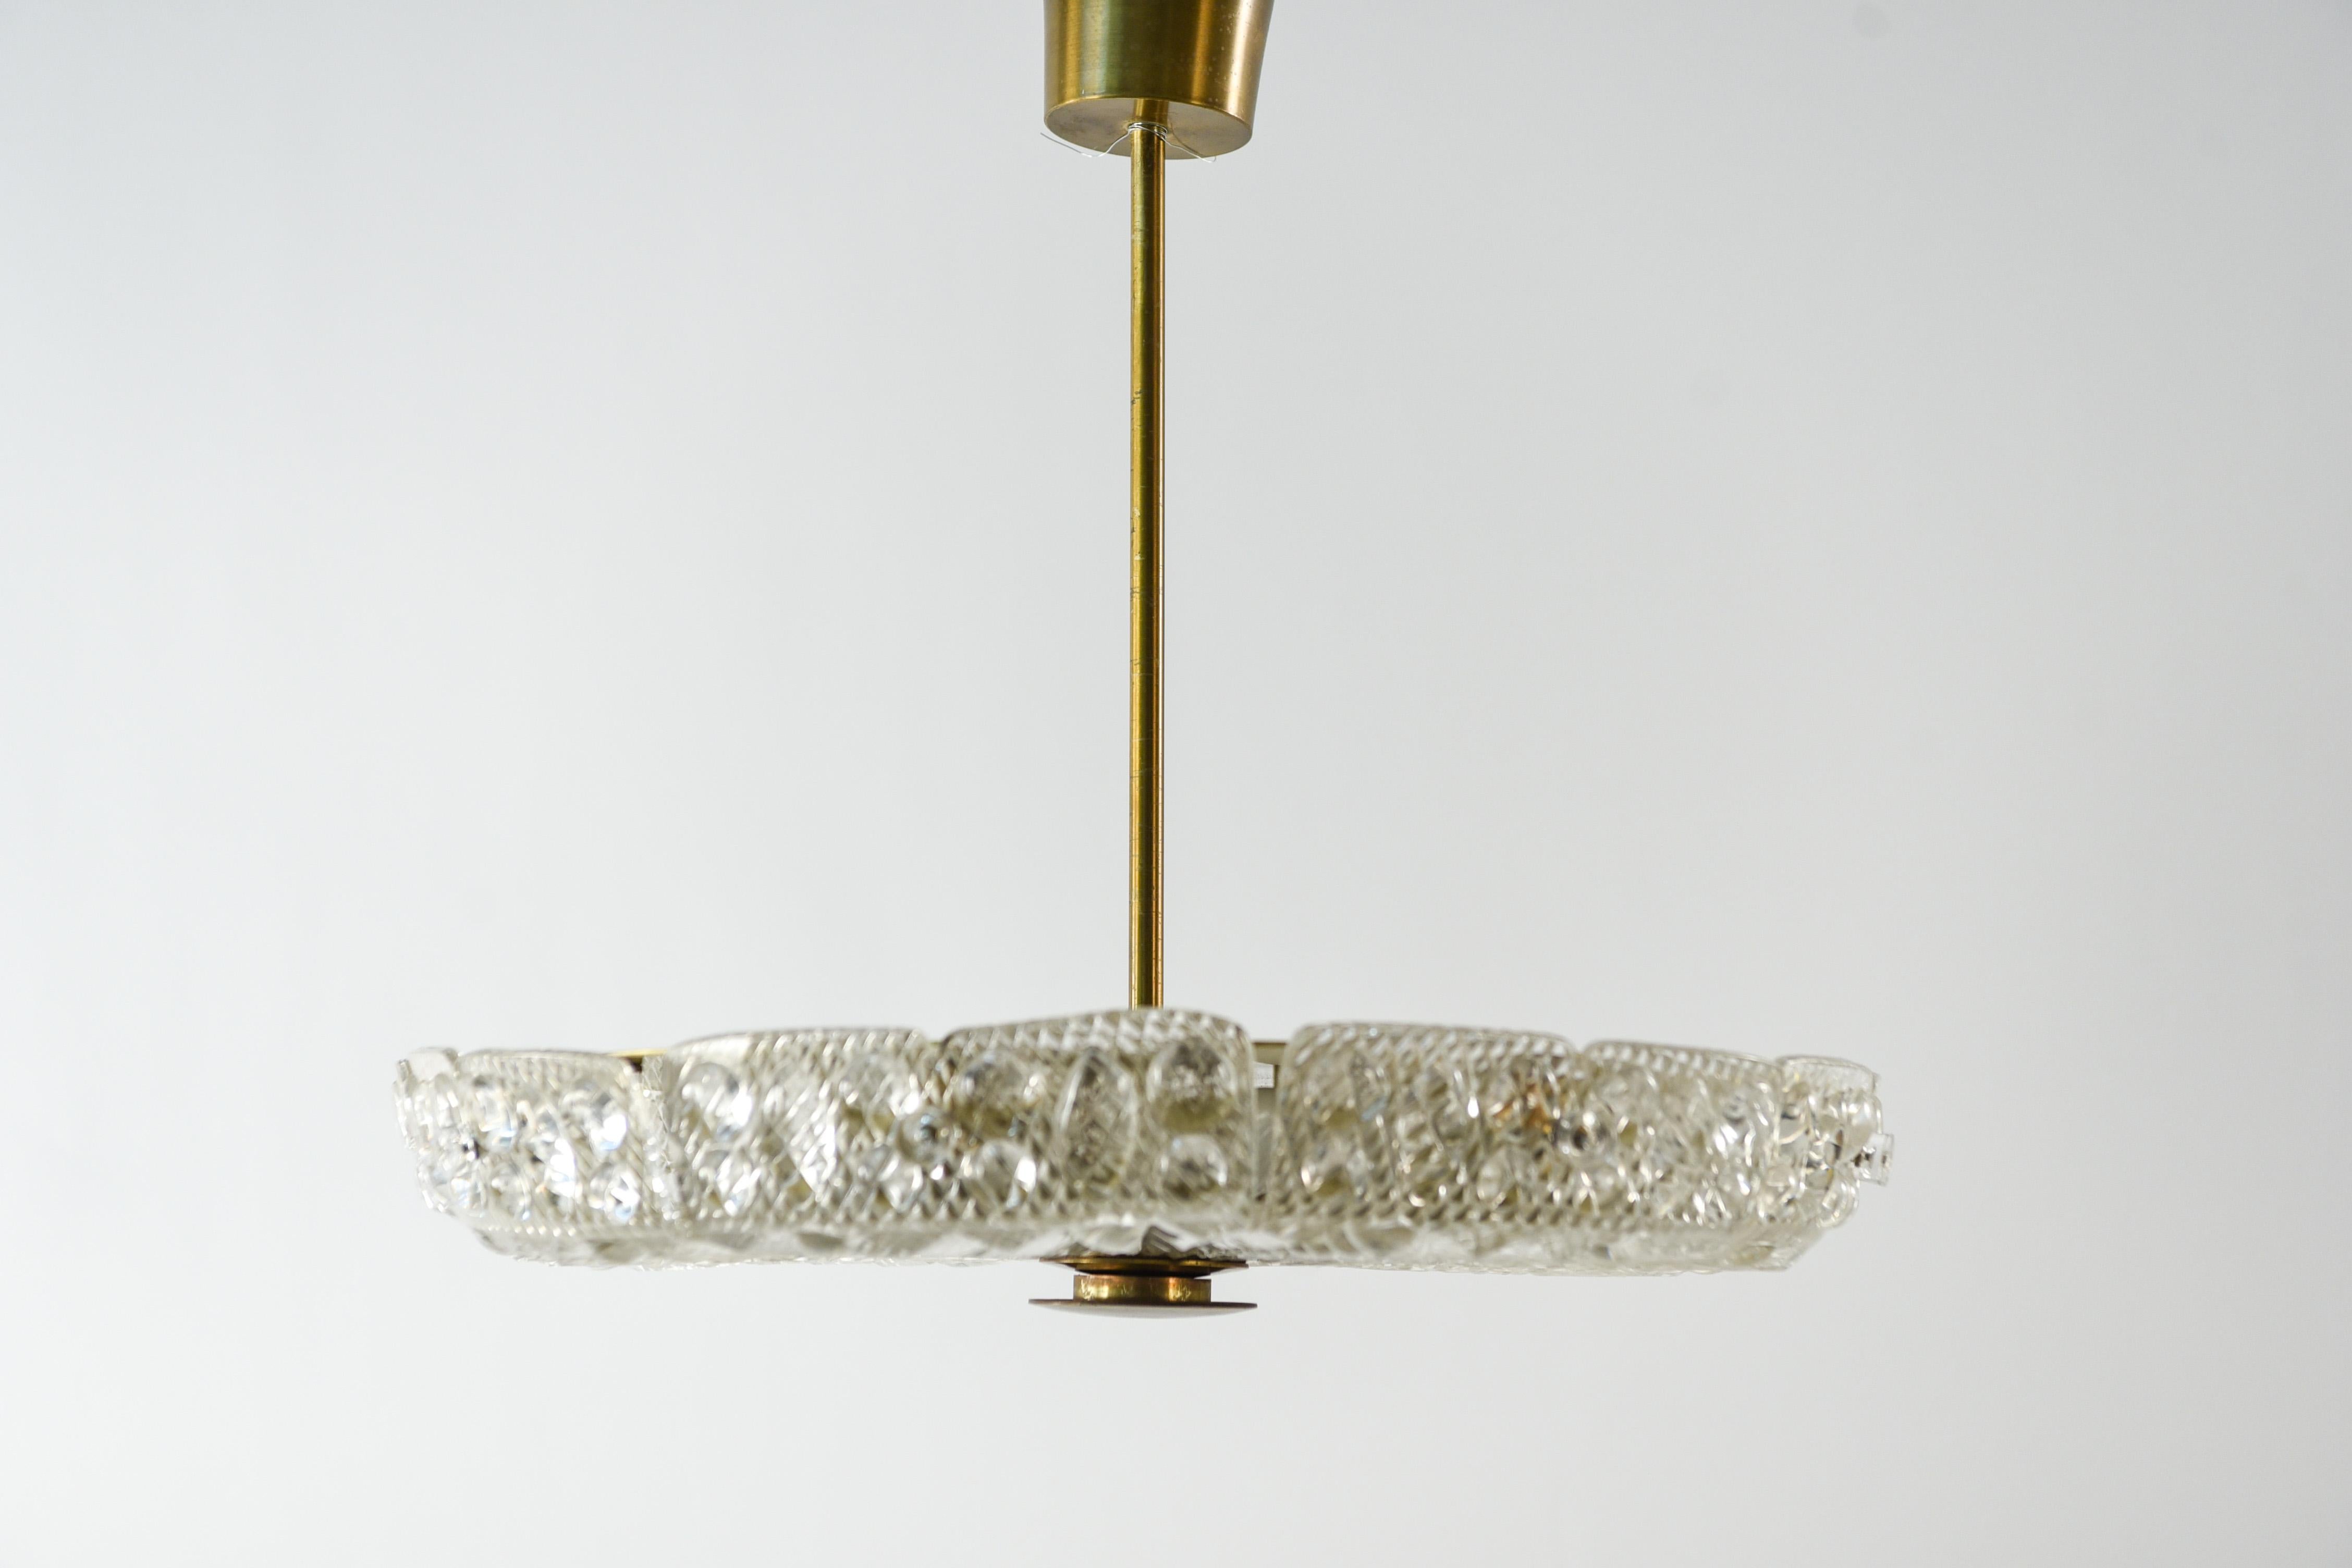 This Swedish midcentury pendant chandelier is model 